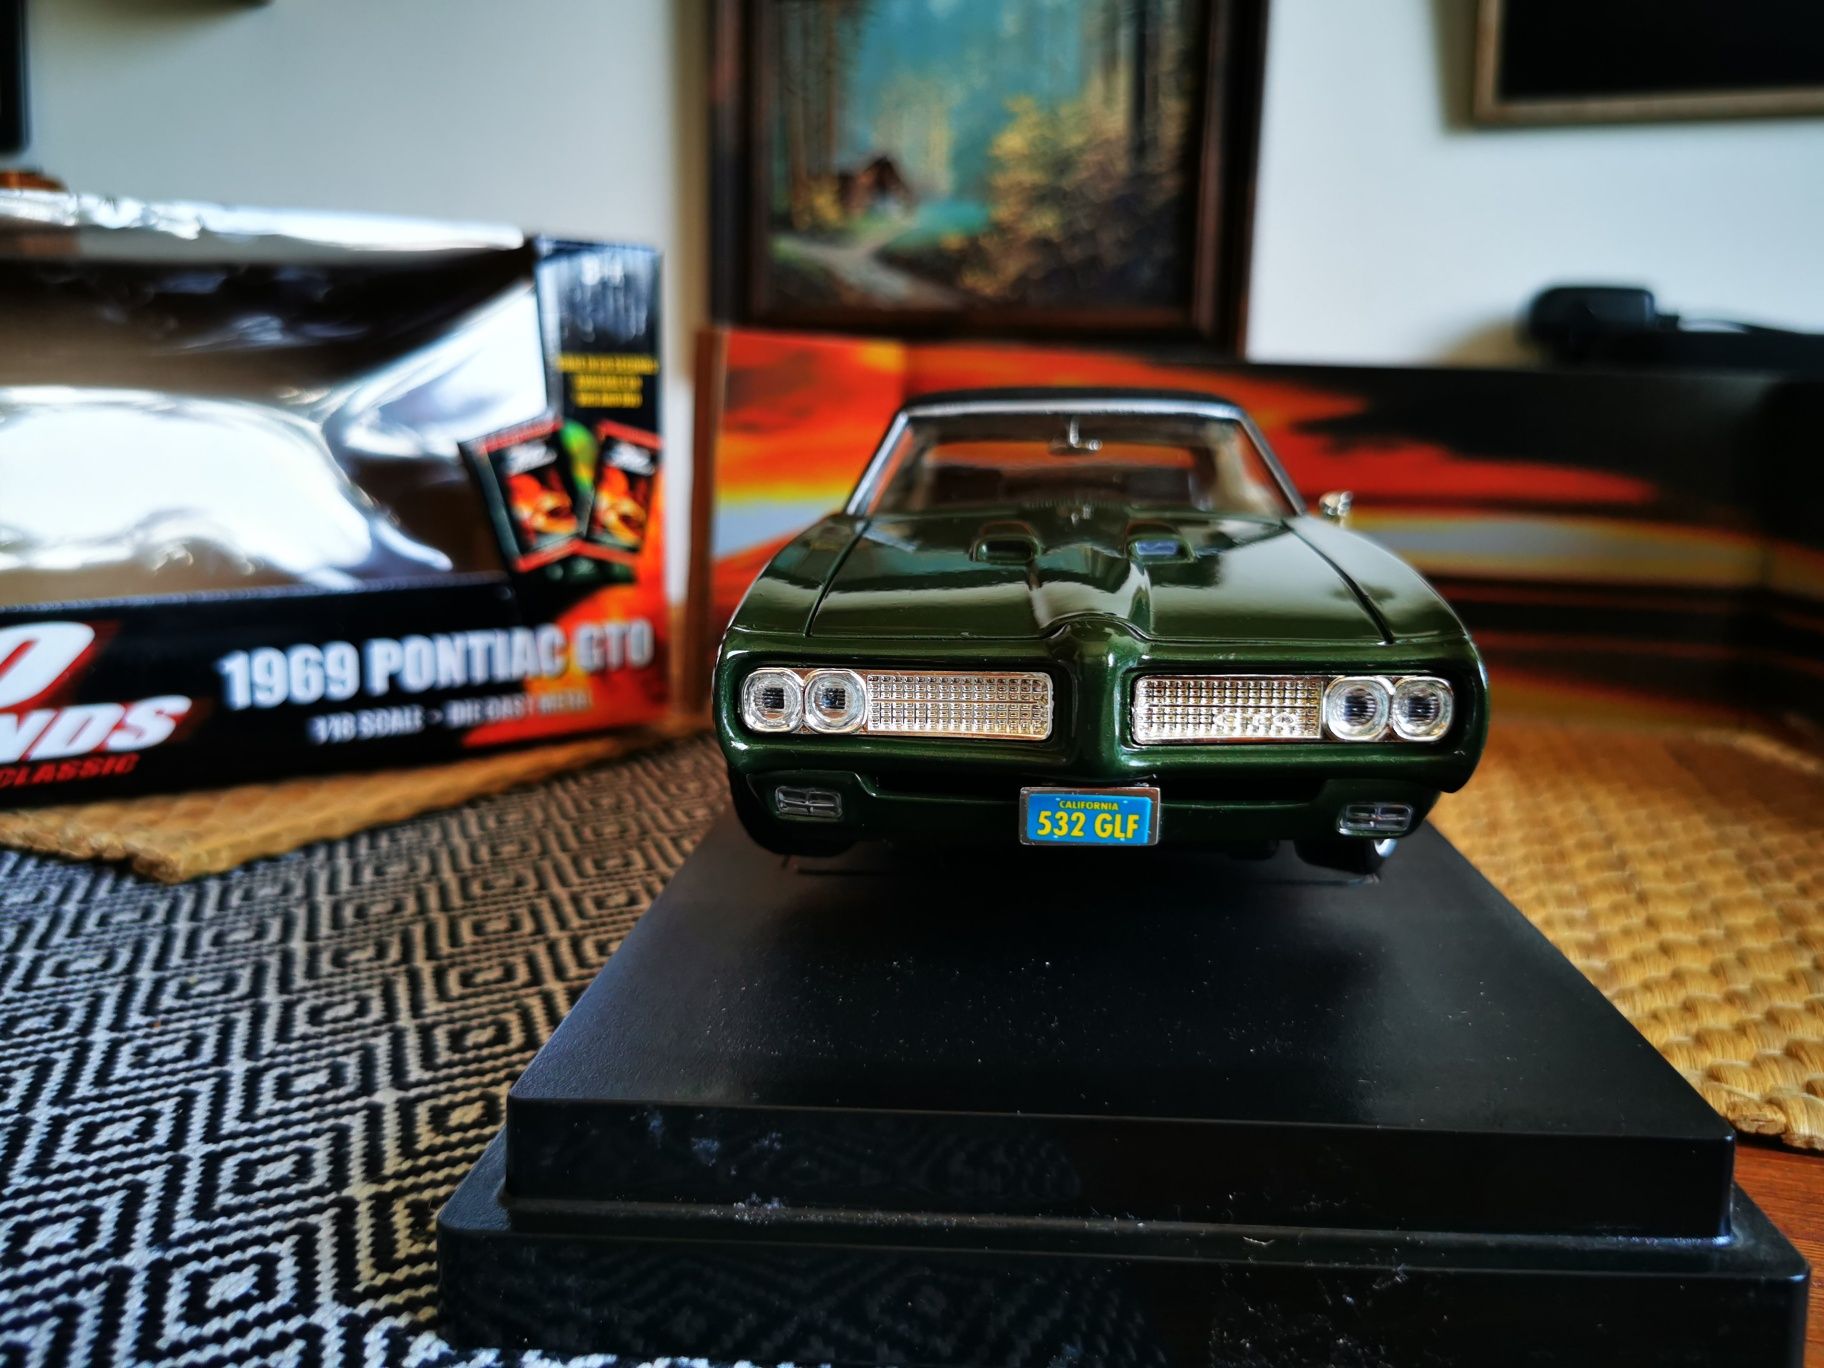 1:18 1969 Pontiac Gto